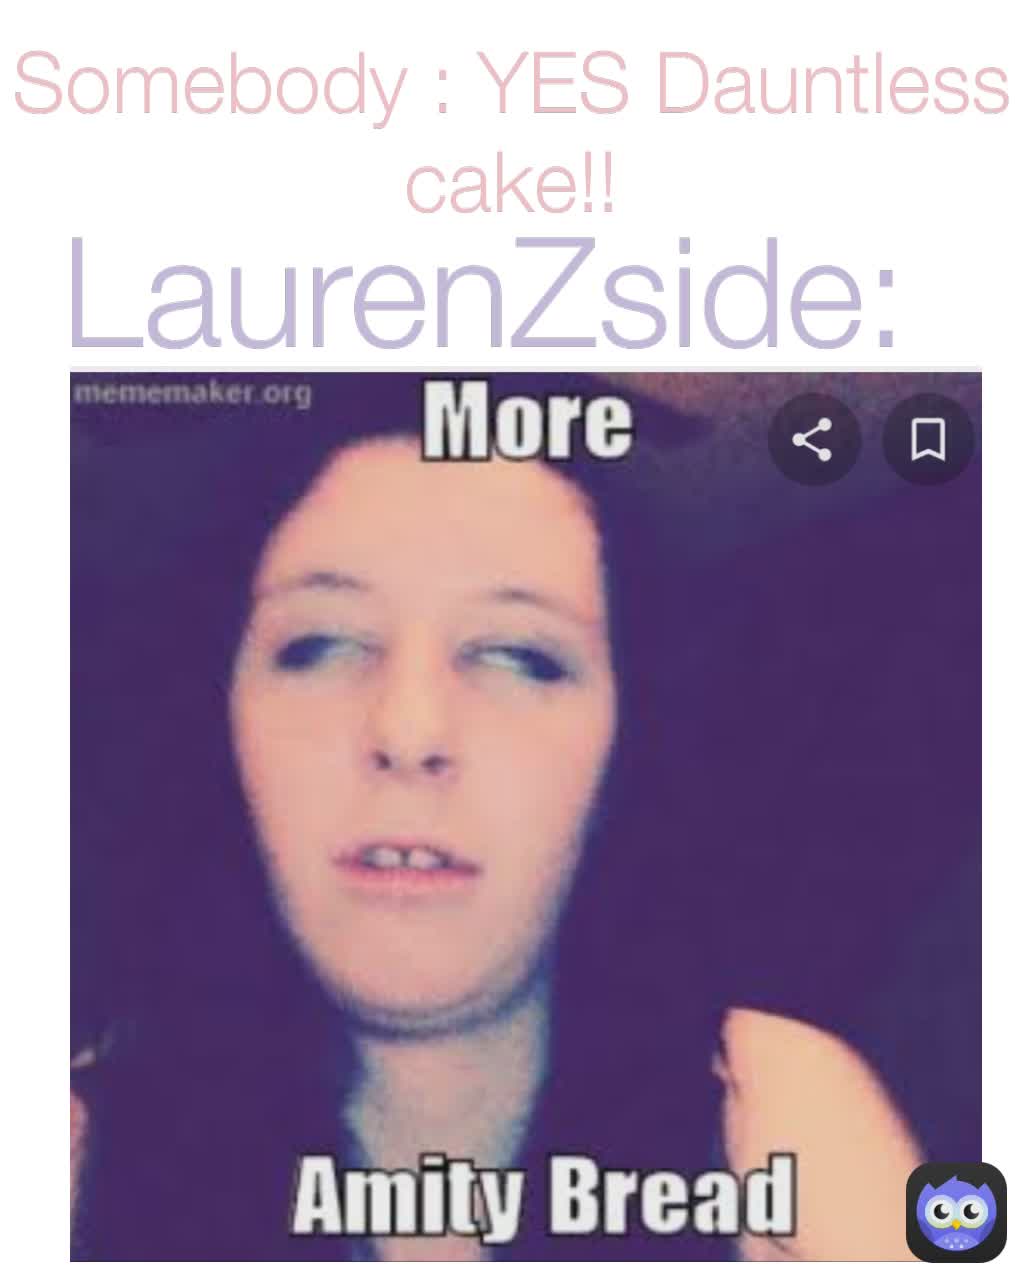 LaurenZside: Somebody : YES Dauntless cake!!